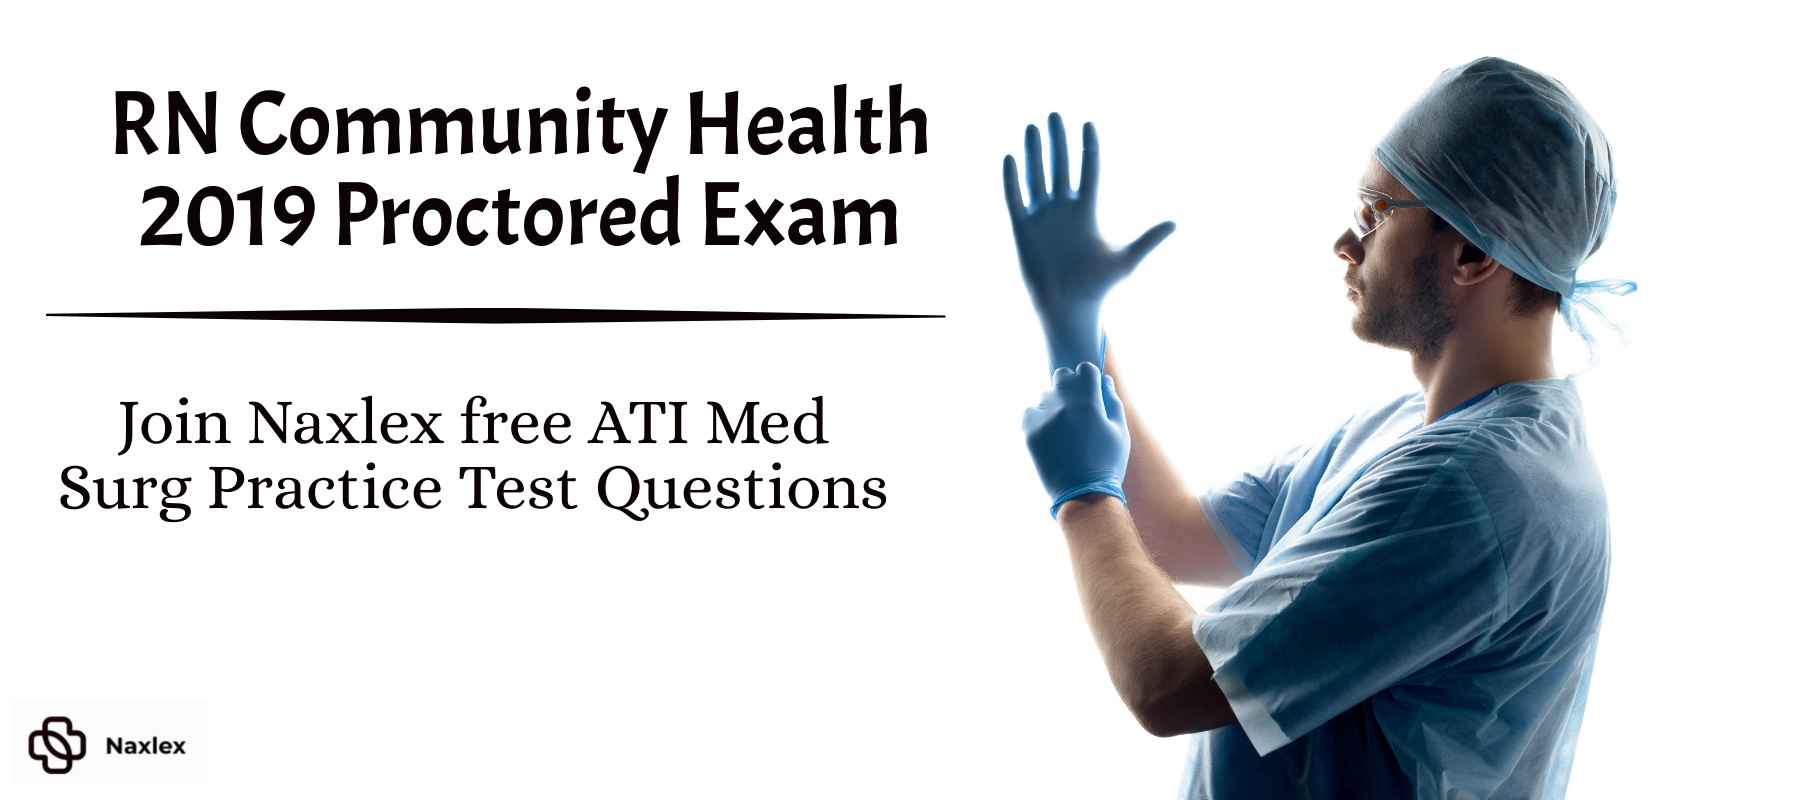 RN Community Health 2019 Proctored Exam